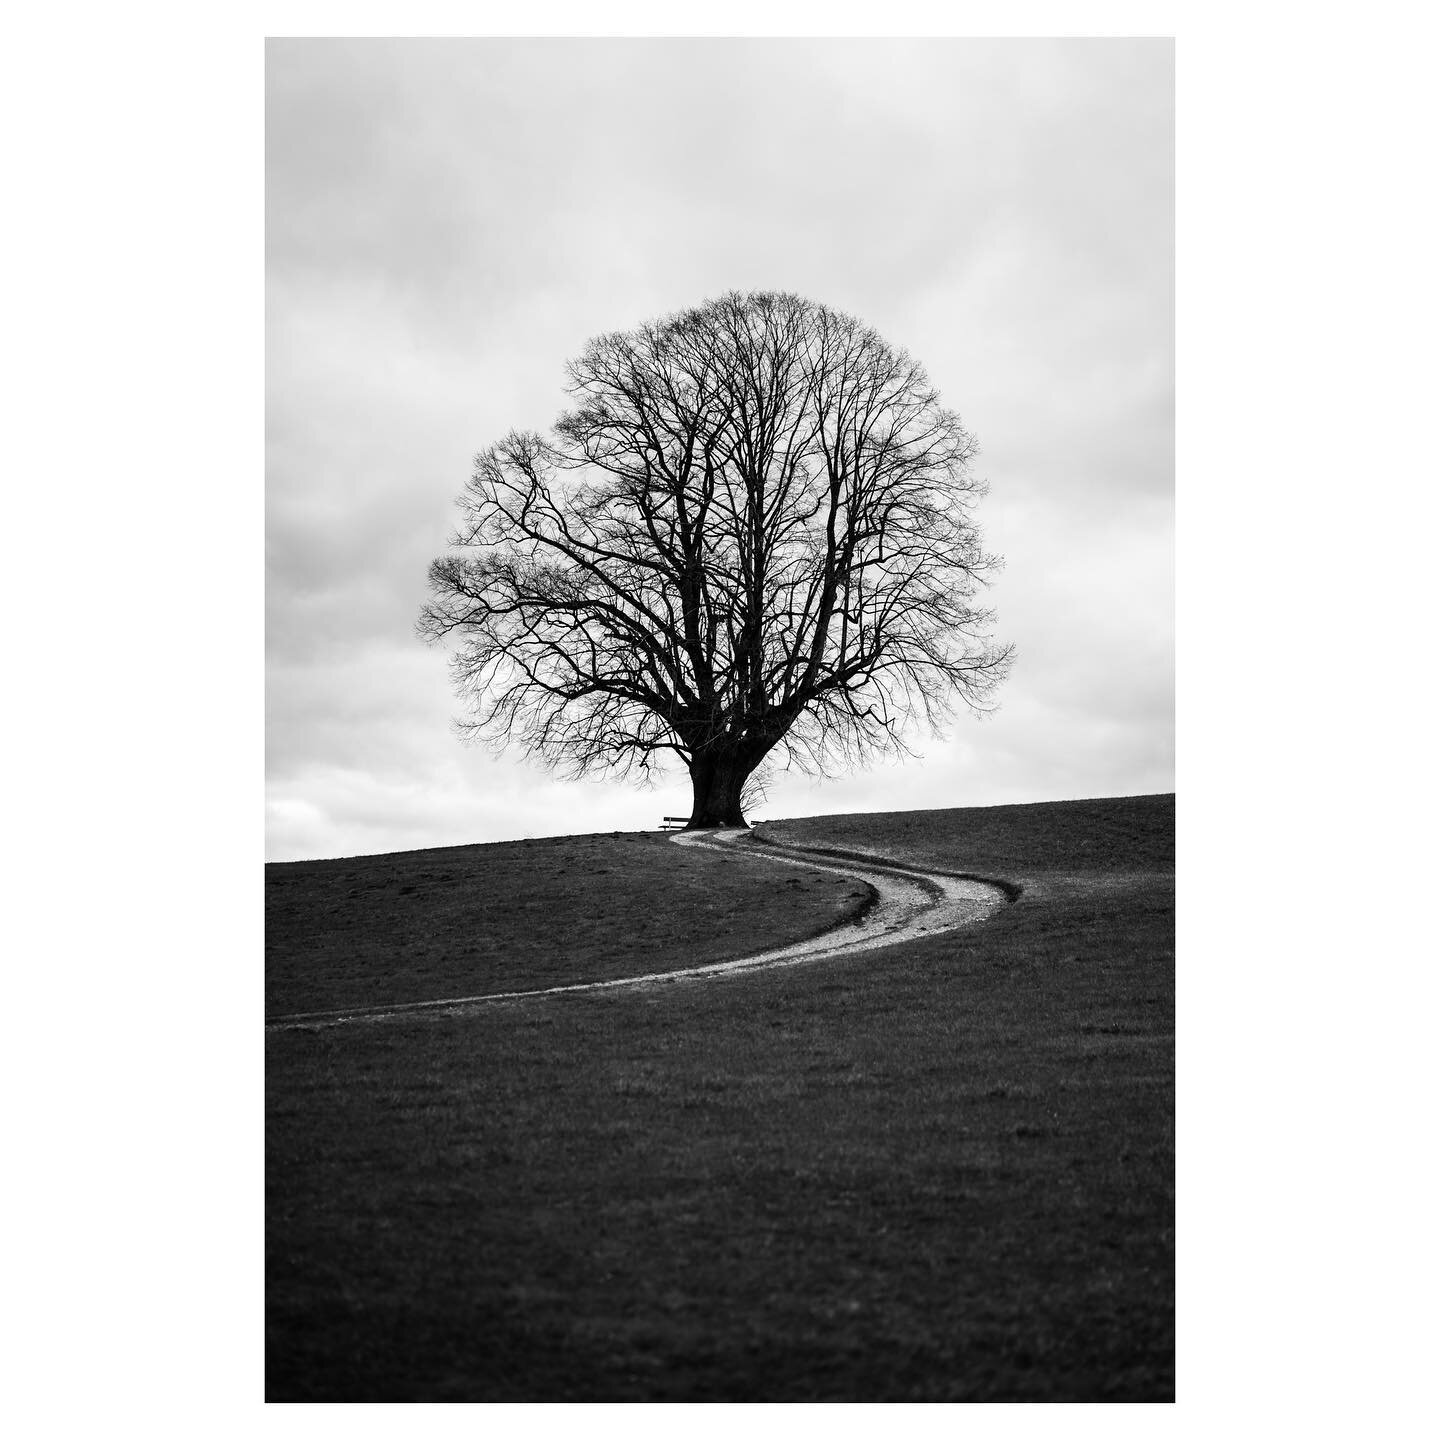 Lonely tree 🌳 
-
-
-
#lonelytree #blackandwhite #blackandwhitephotography #branches #sonyalpha #sony #sonya7iii #photography #bealpha #austria #salzburg #salzburgerland #visitsalzburg #mood #moodygrams #moodoftheday #nature #naturephotography #lands